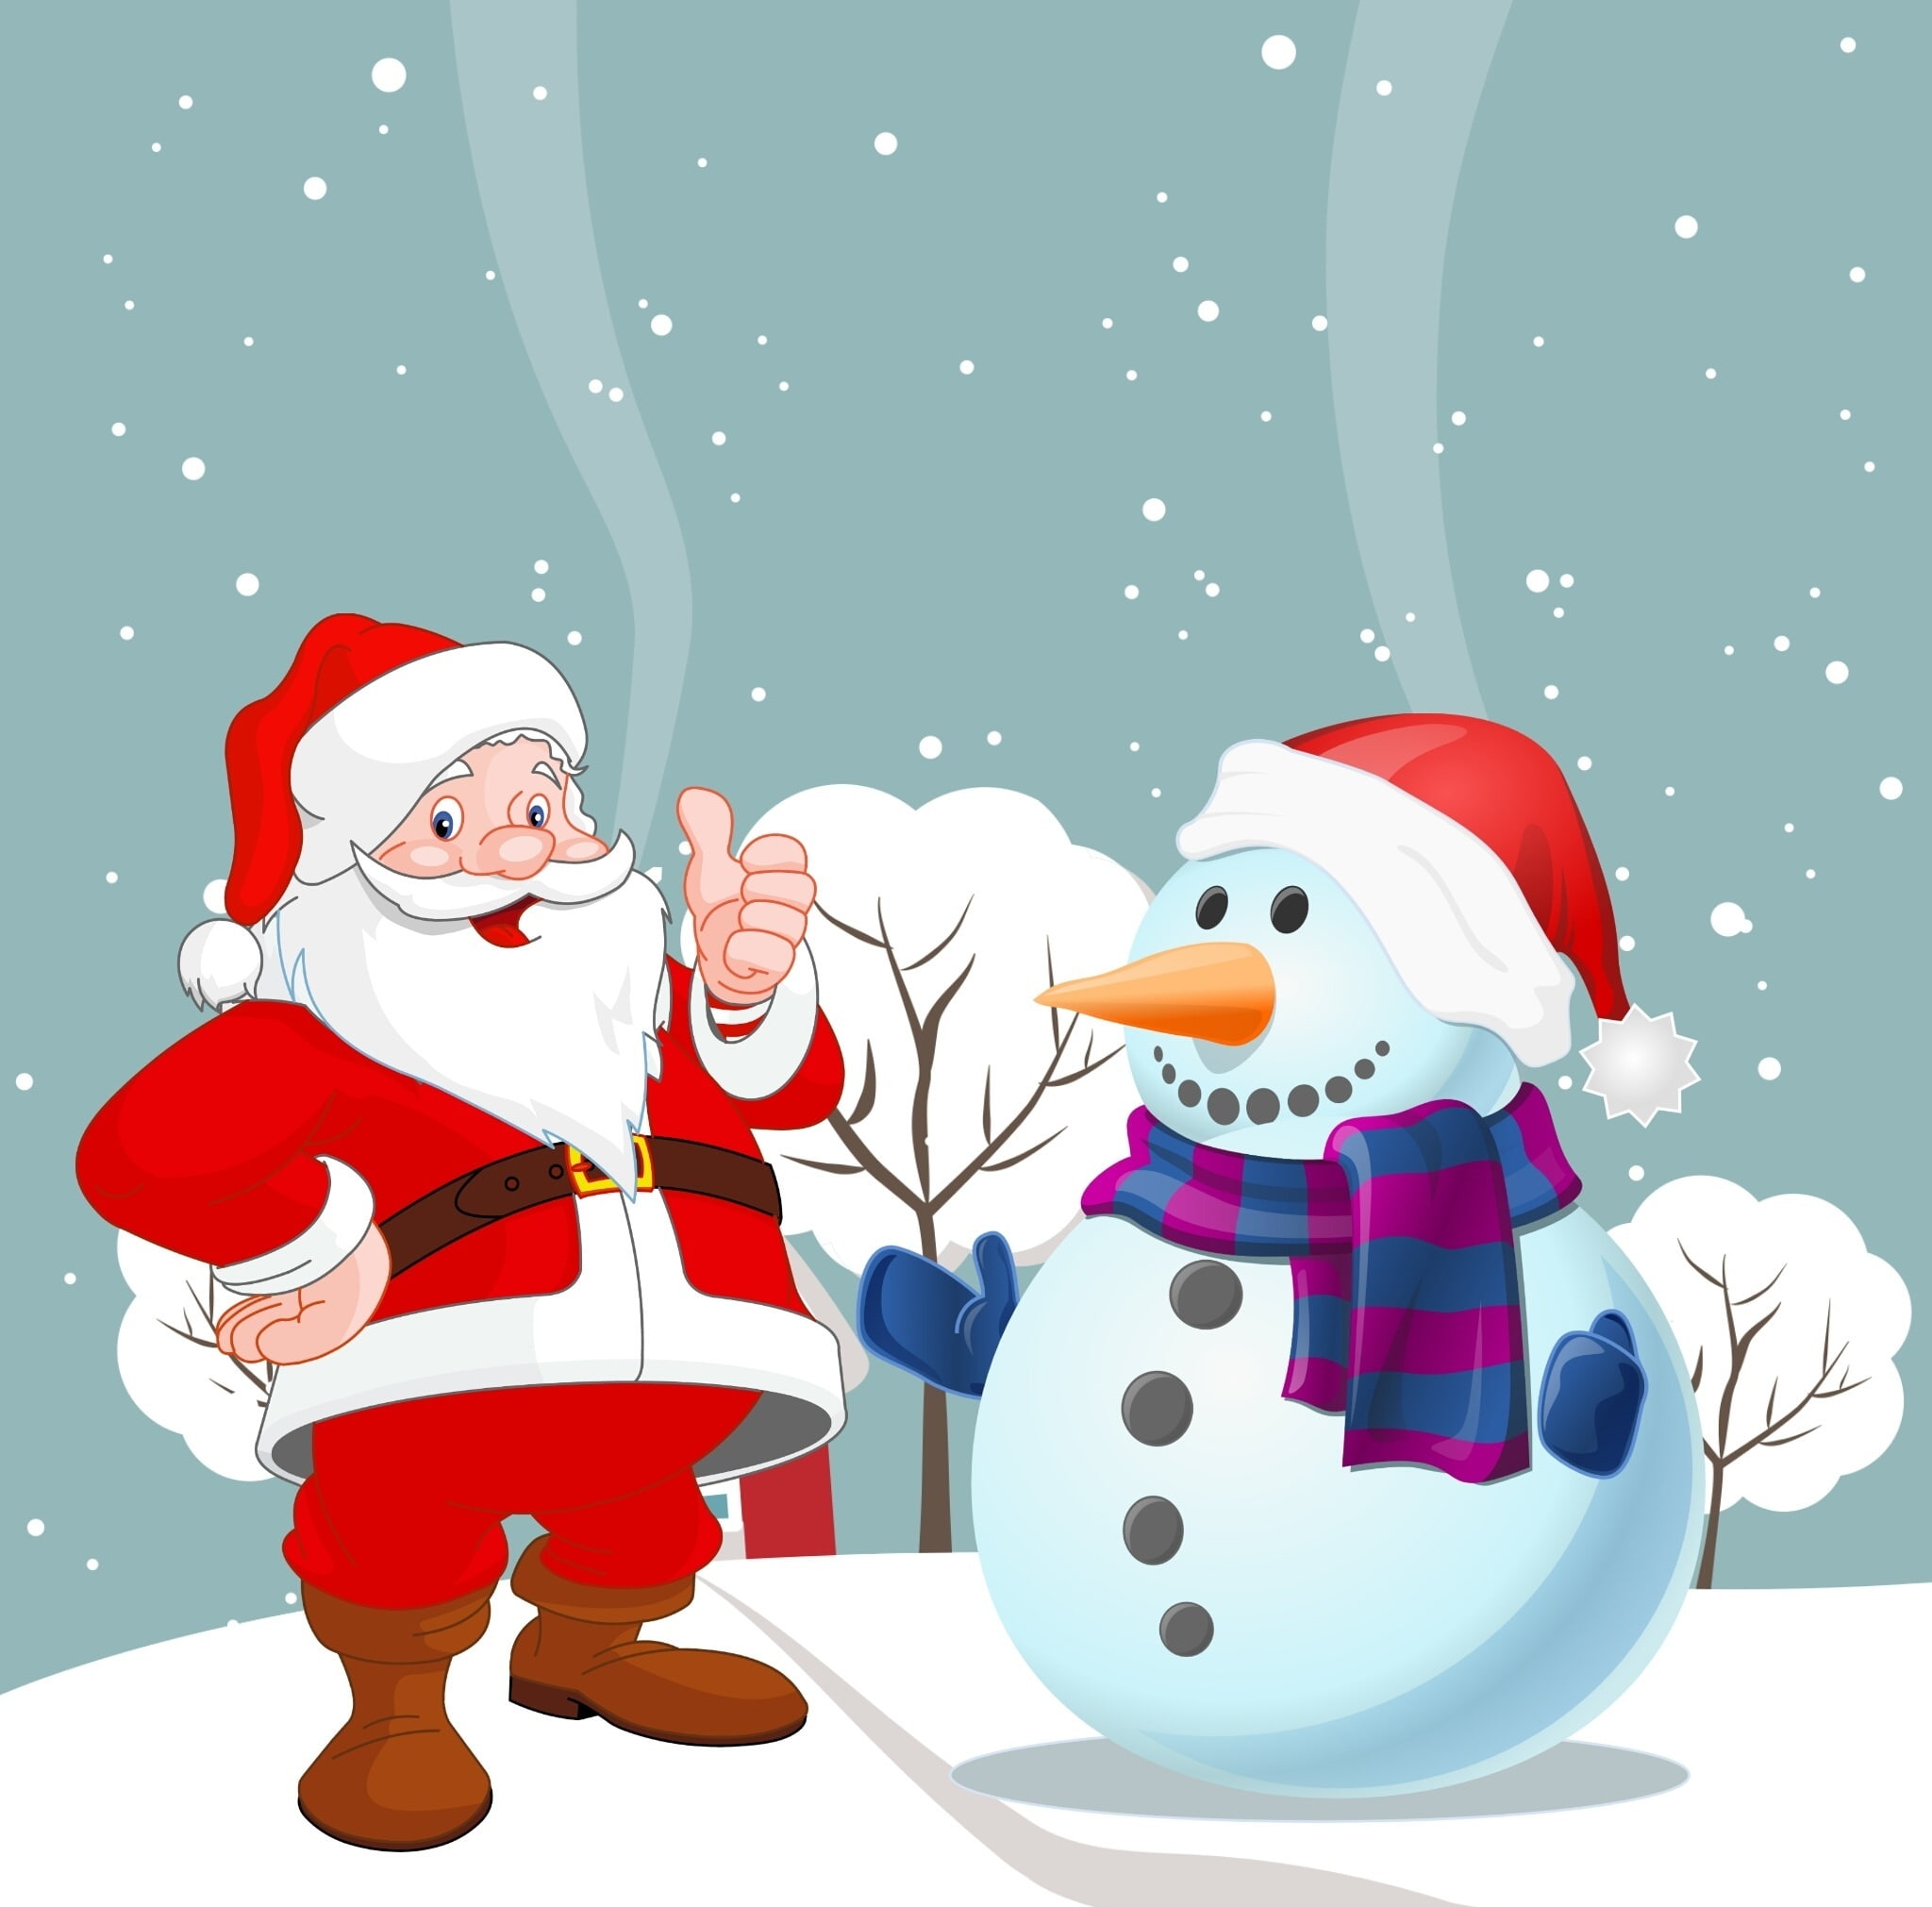 Merry Christmas, Holidays, Landscape, Winter, Happy, Santa, Snowman